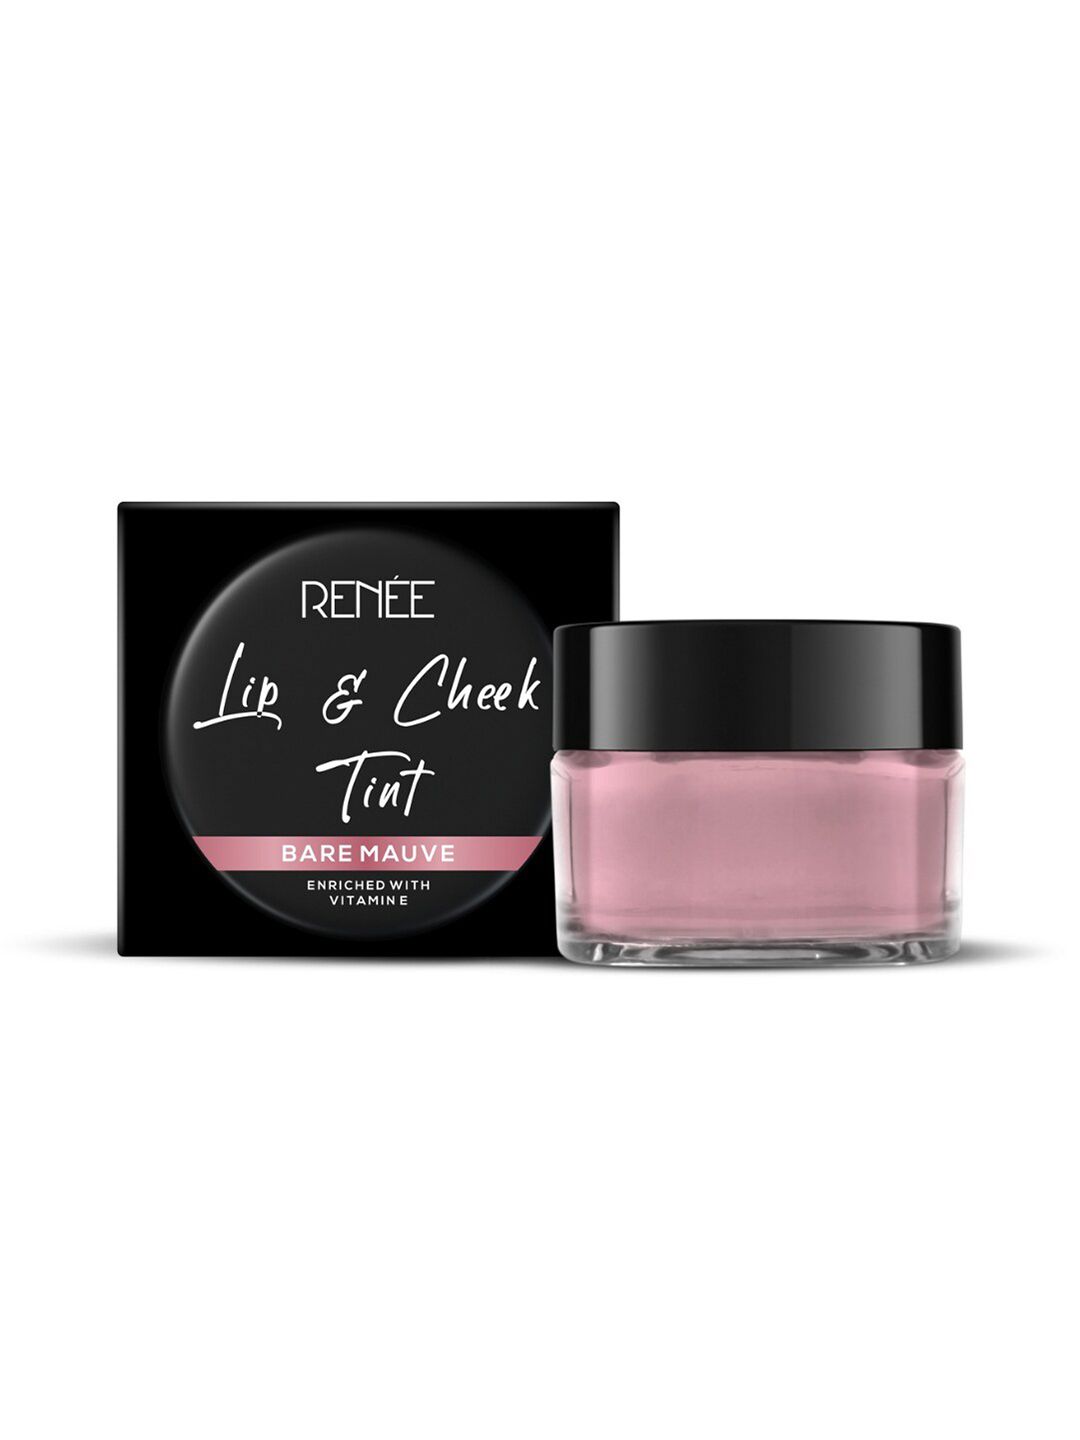 RENEE Lip & Cheek Tint - Bare Mauve 8g Price in India